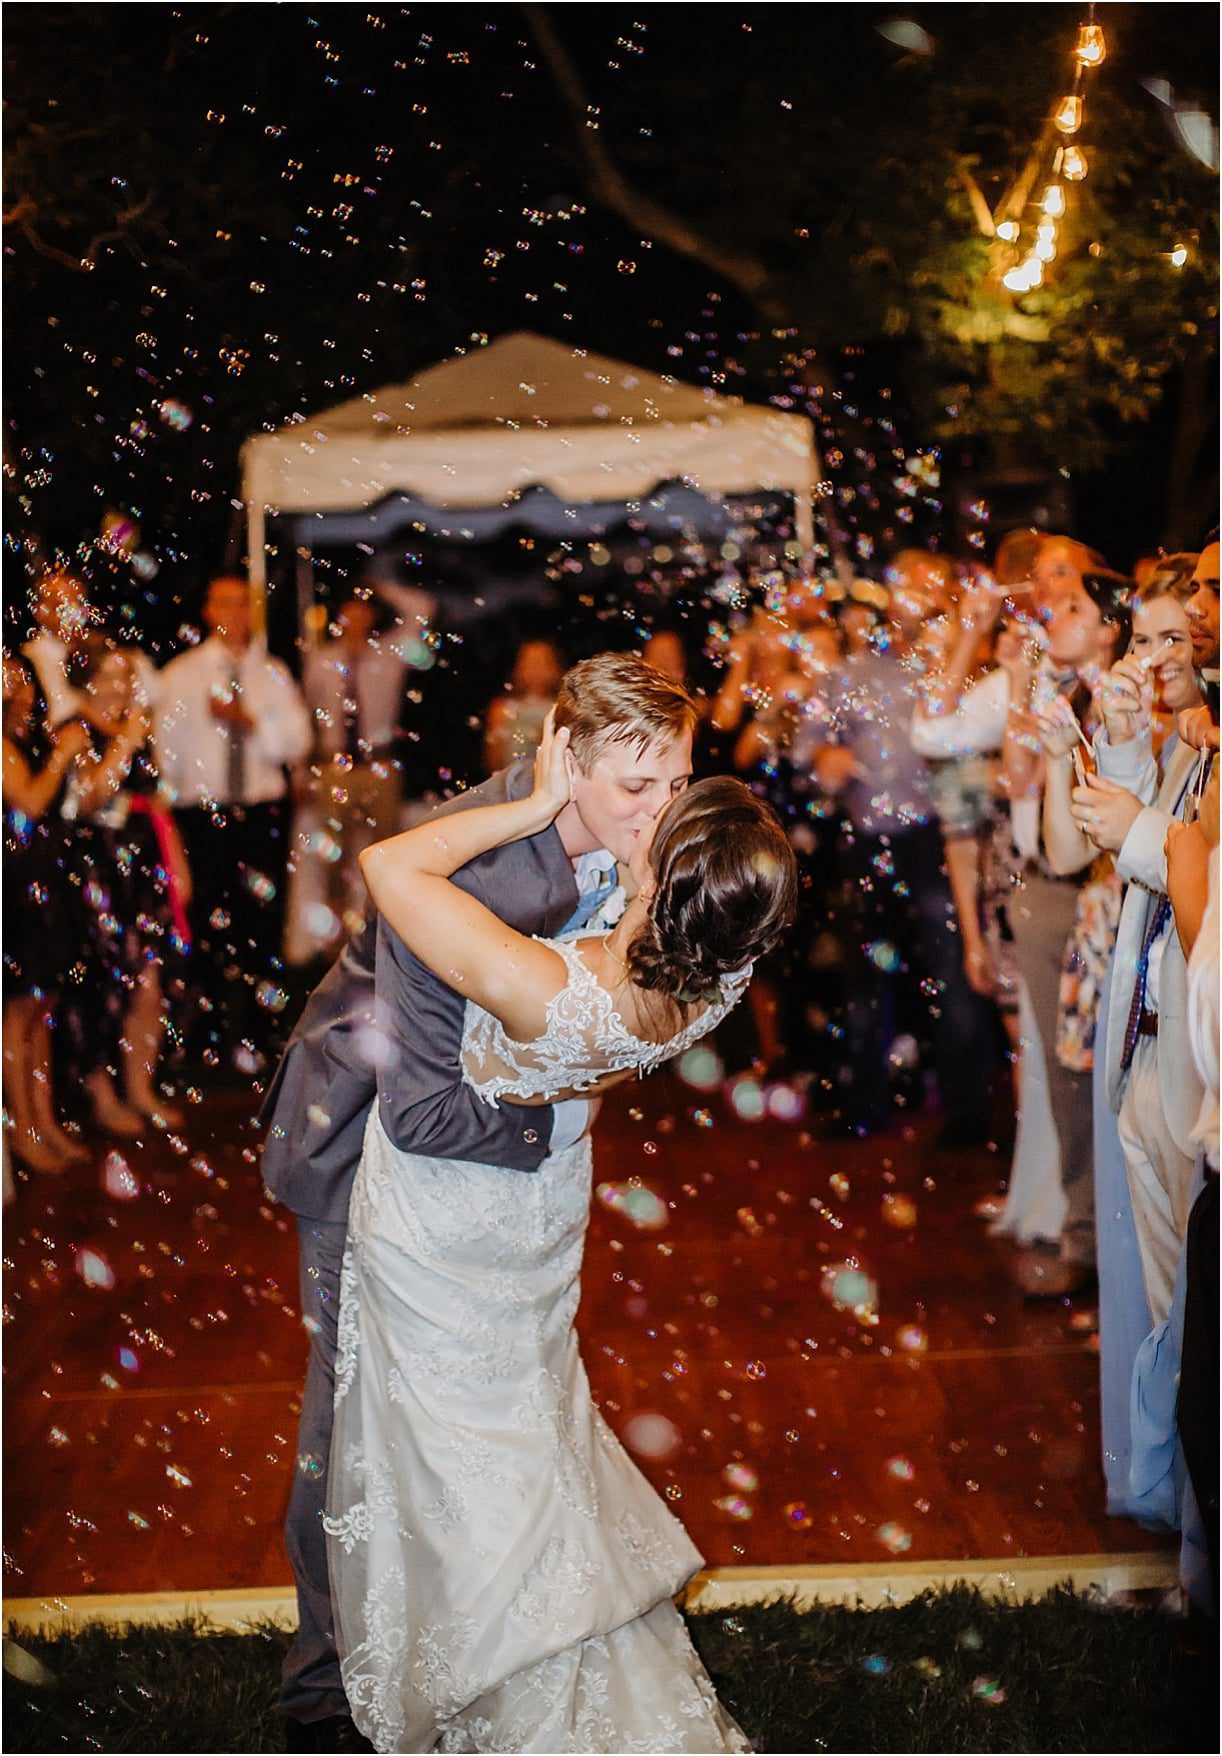 Cape Charles Wedding Venues | Blue Wedding | Hill City Bride Virginia Weddings Blog | Couple Exit Bubbles